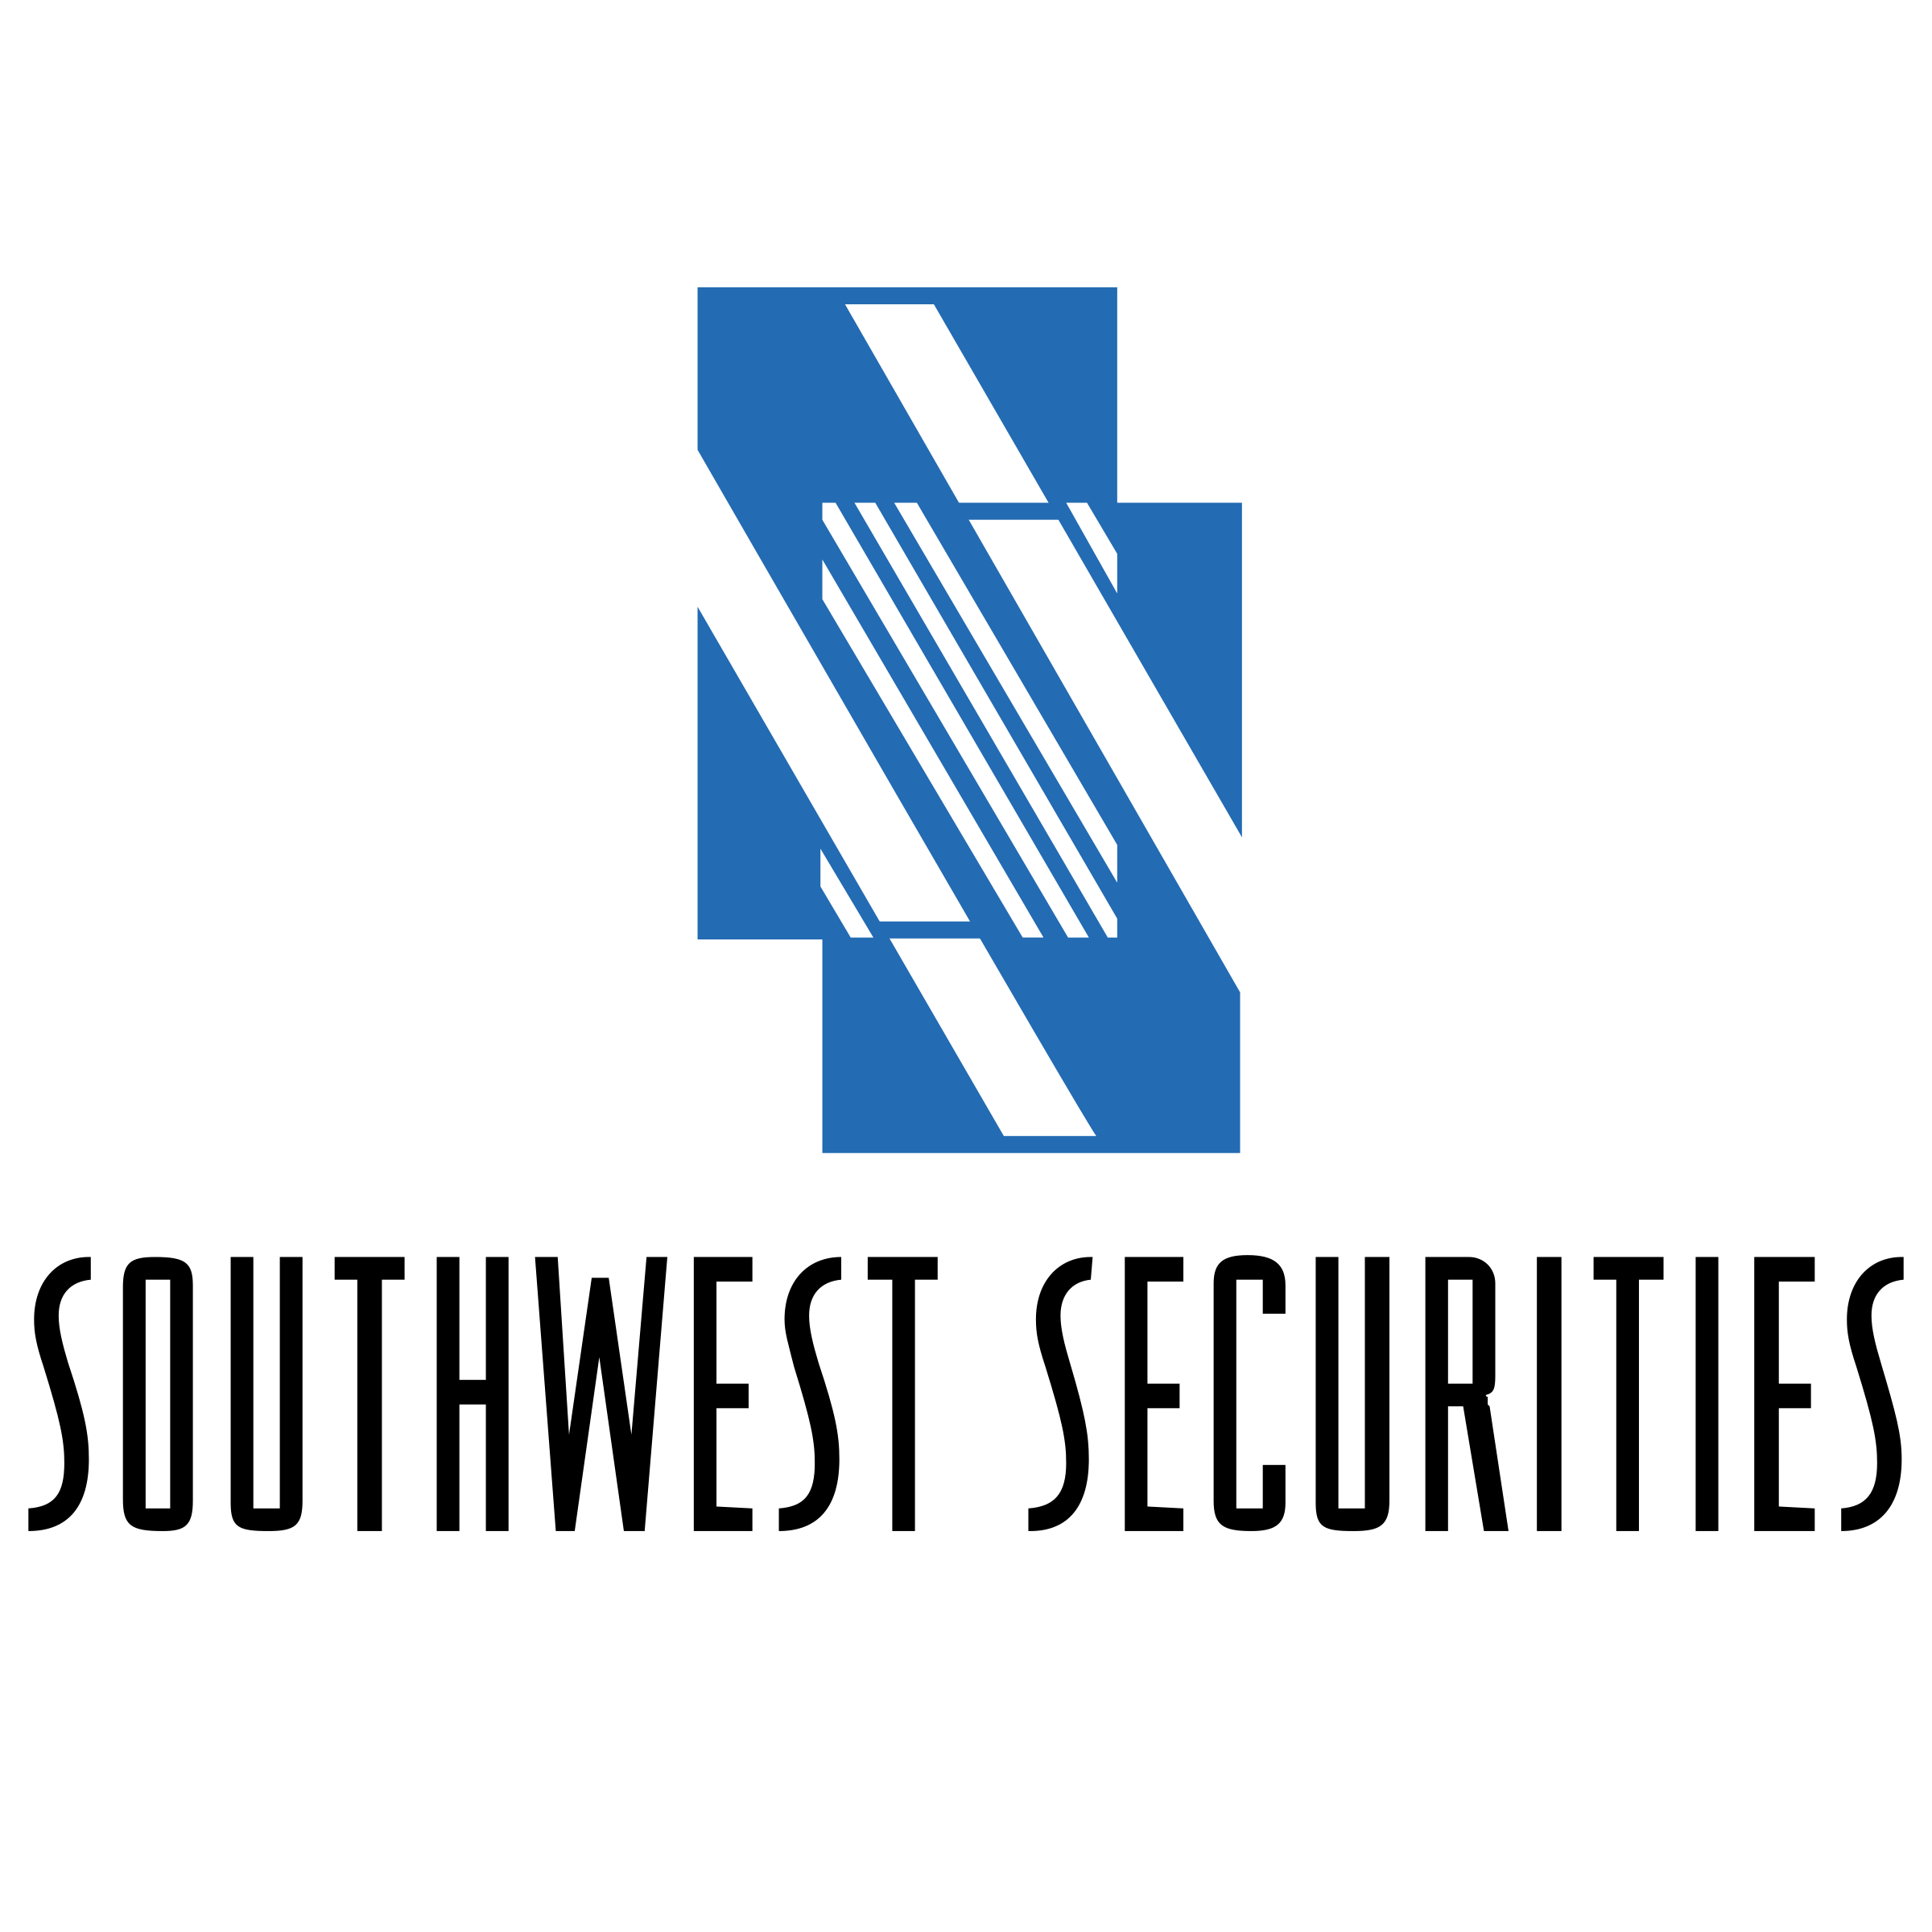 South West Securities Logo - Southwest Securities Logo PNG Transparent & SVG Vector